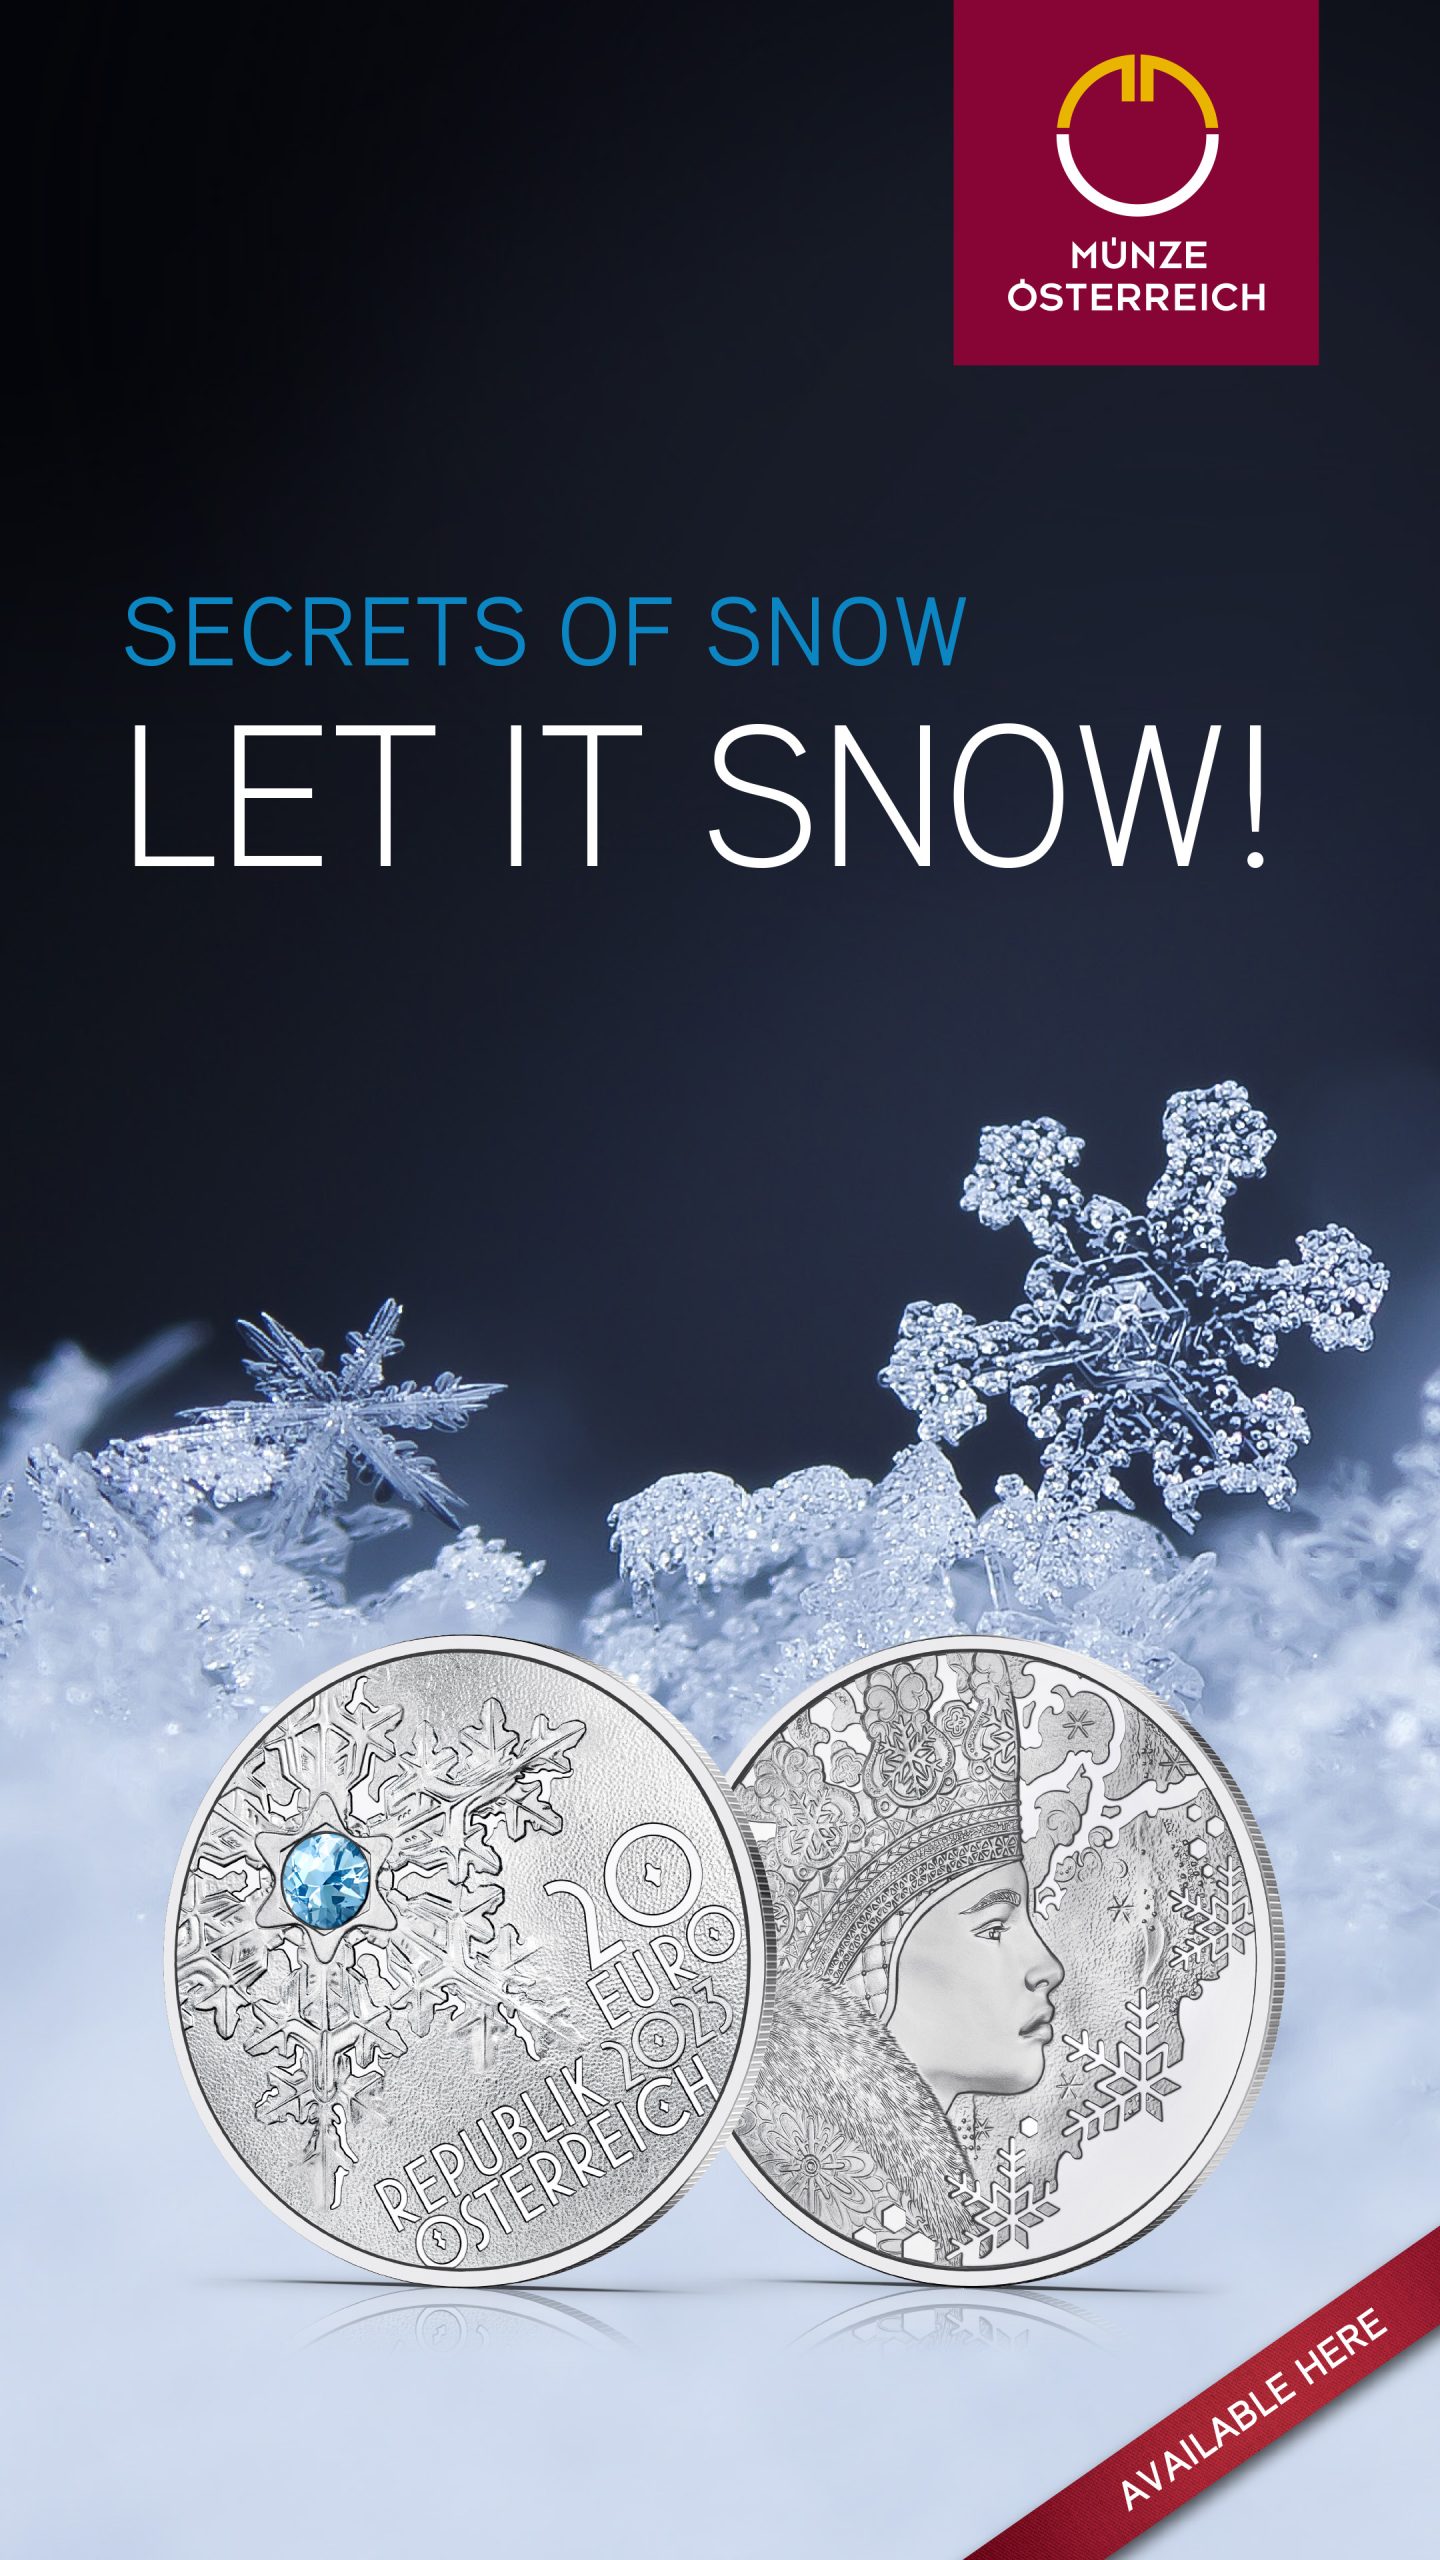 (EUR01.Proof.2023.26349) 20 € Austria 2023 Proof silver - Secrets of Snow (blog) (zoom)